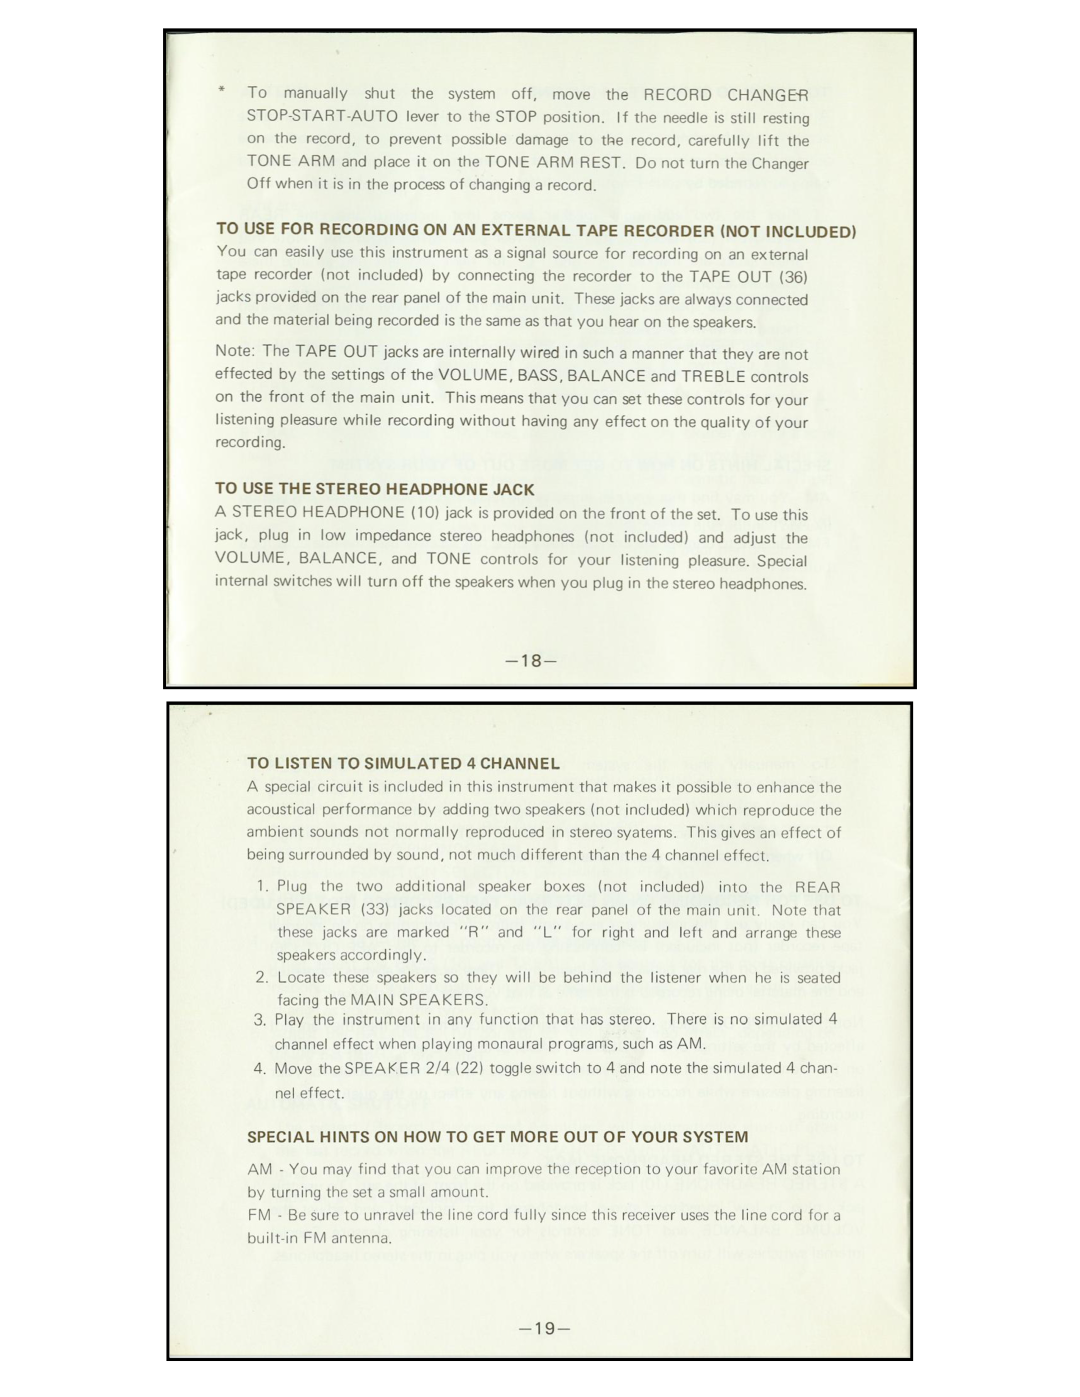 Emerson M2370 manual 